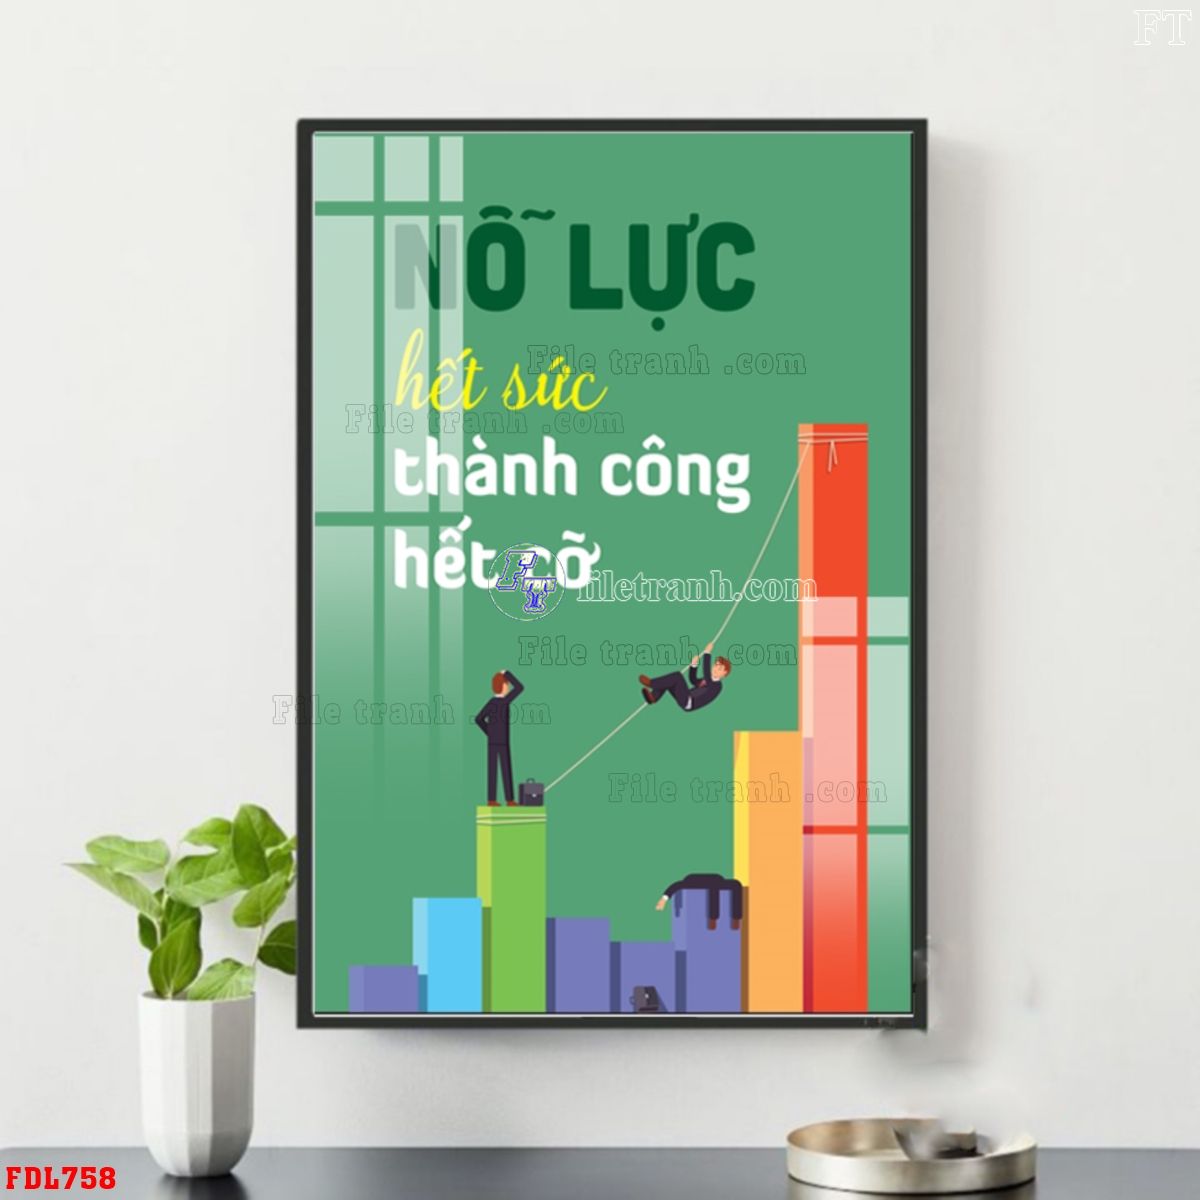 https://filetranh.com/tranh-dong-luc/file-dong-luc-fdl758.html